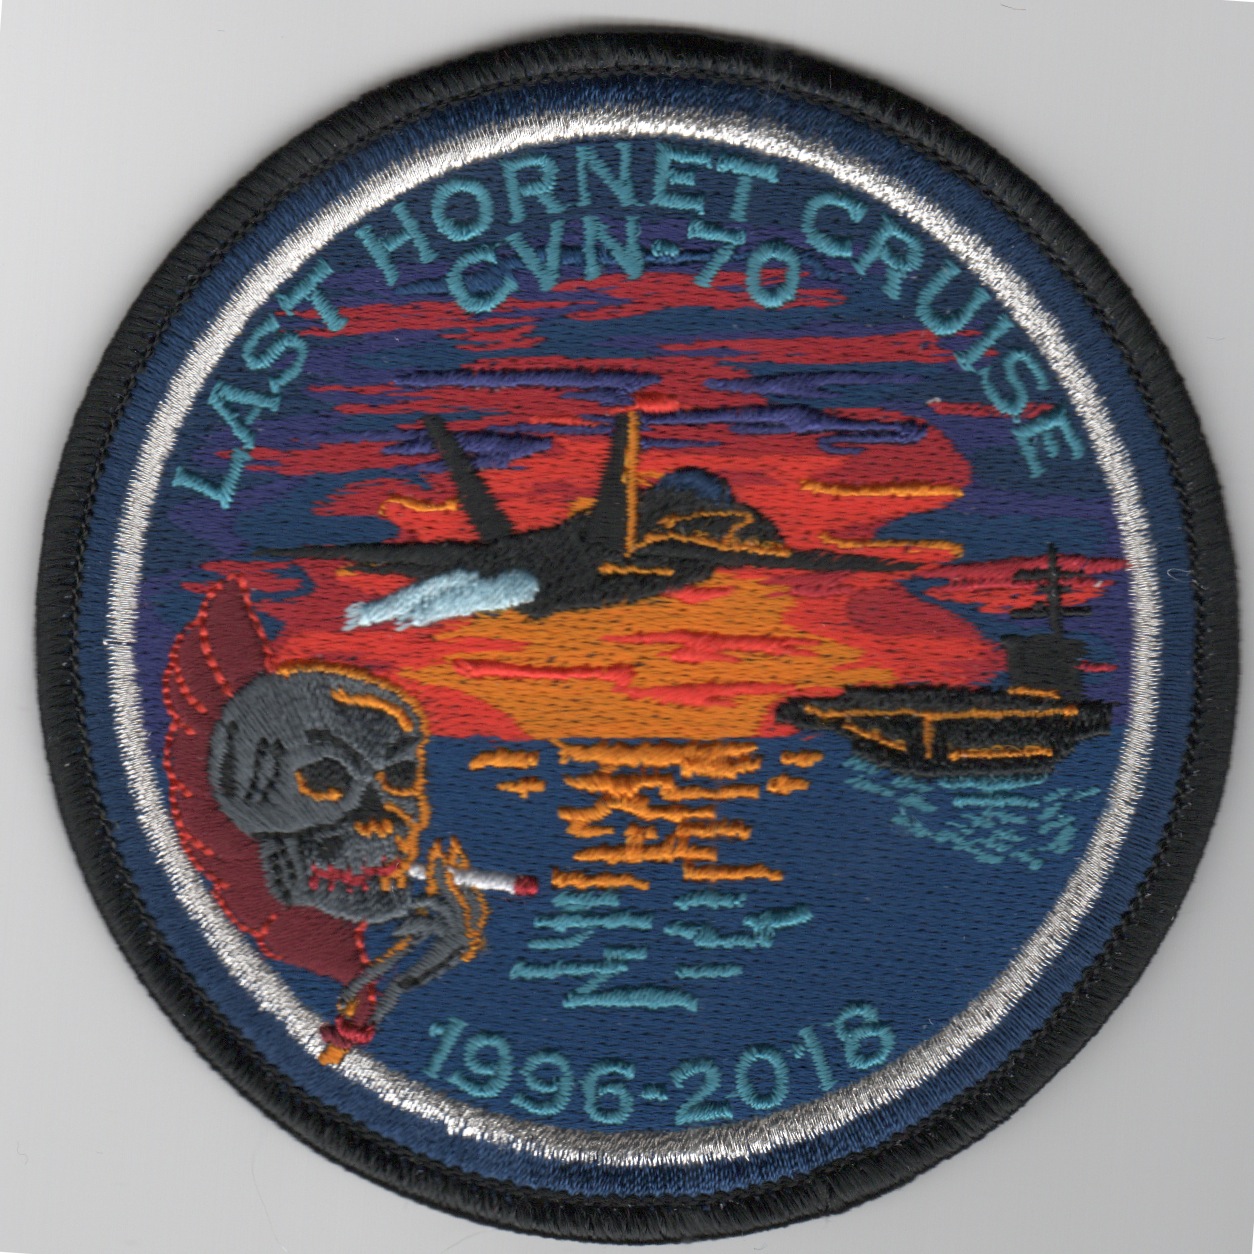 VFA-34 'LAST HORNET' Cruise (Round)